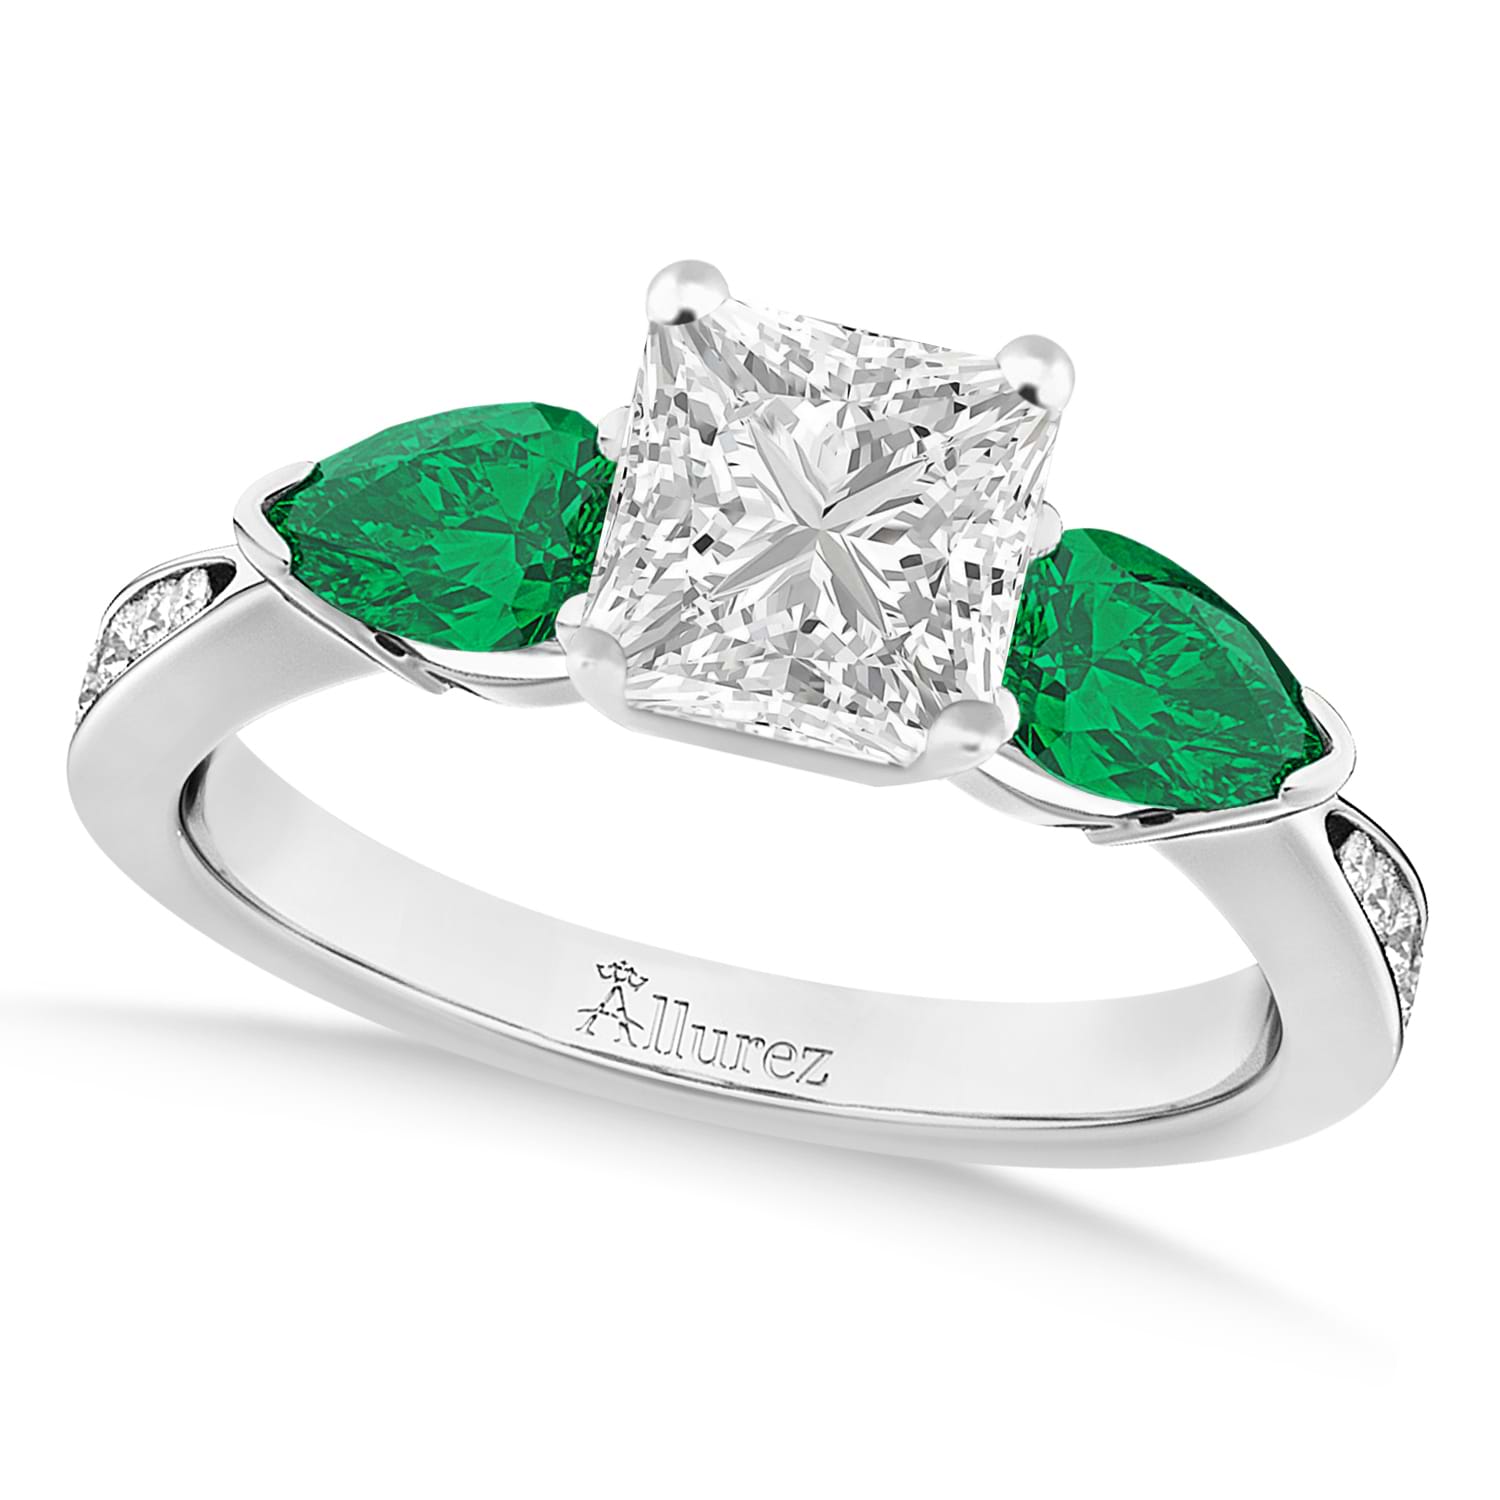 Princess Diamond & Pear Green Emerald Engagement Ring in Palladium (1.29ct)